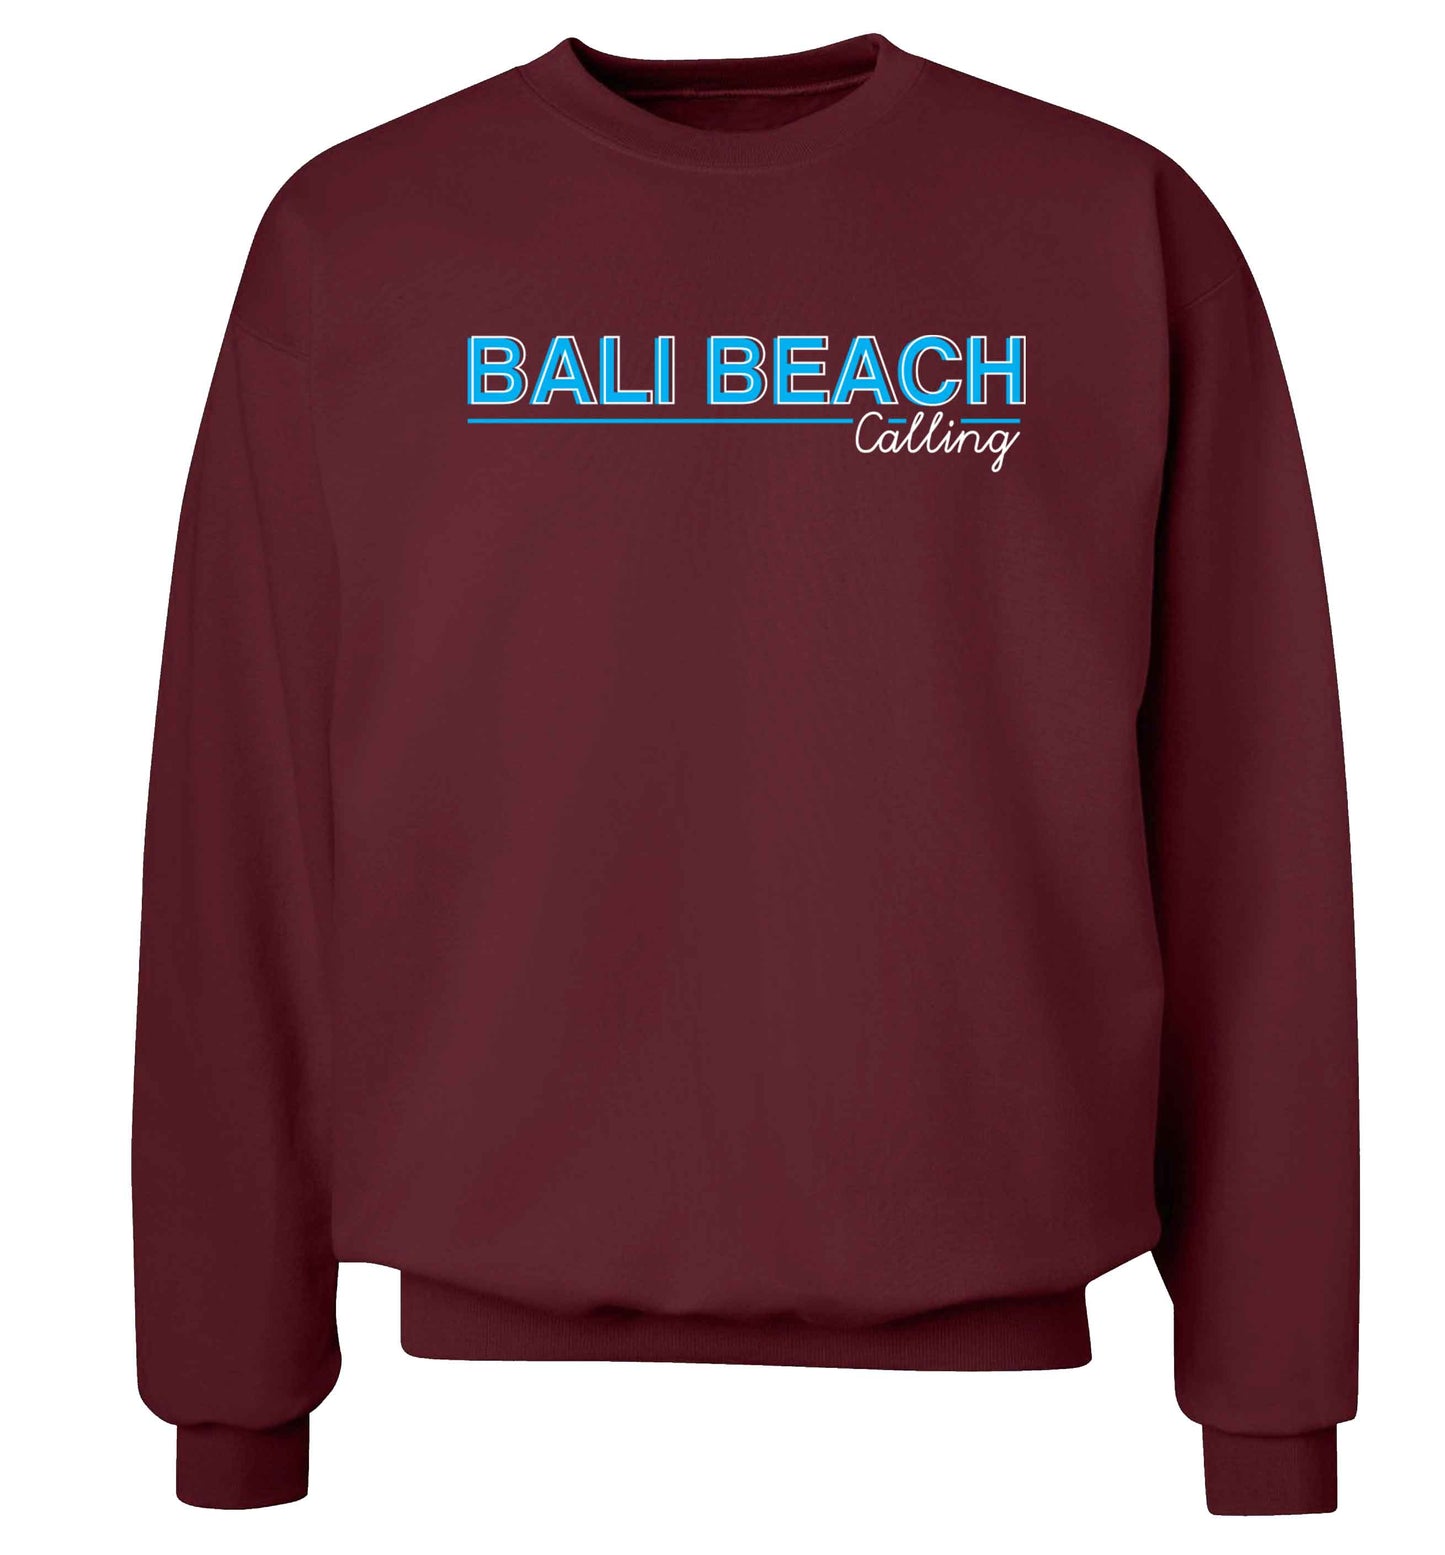 Bali beach calling Adult's unisex maroon Sweater 2XL